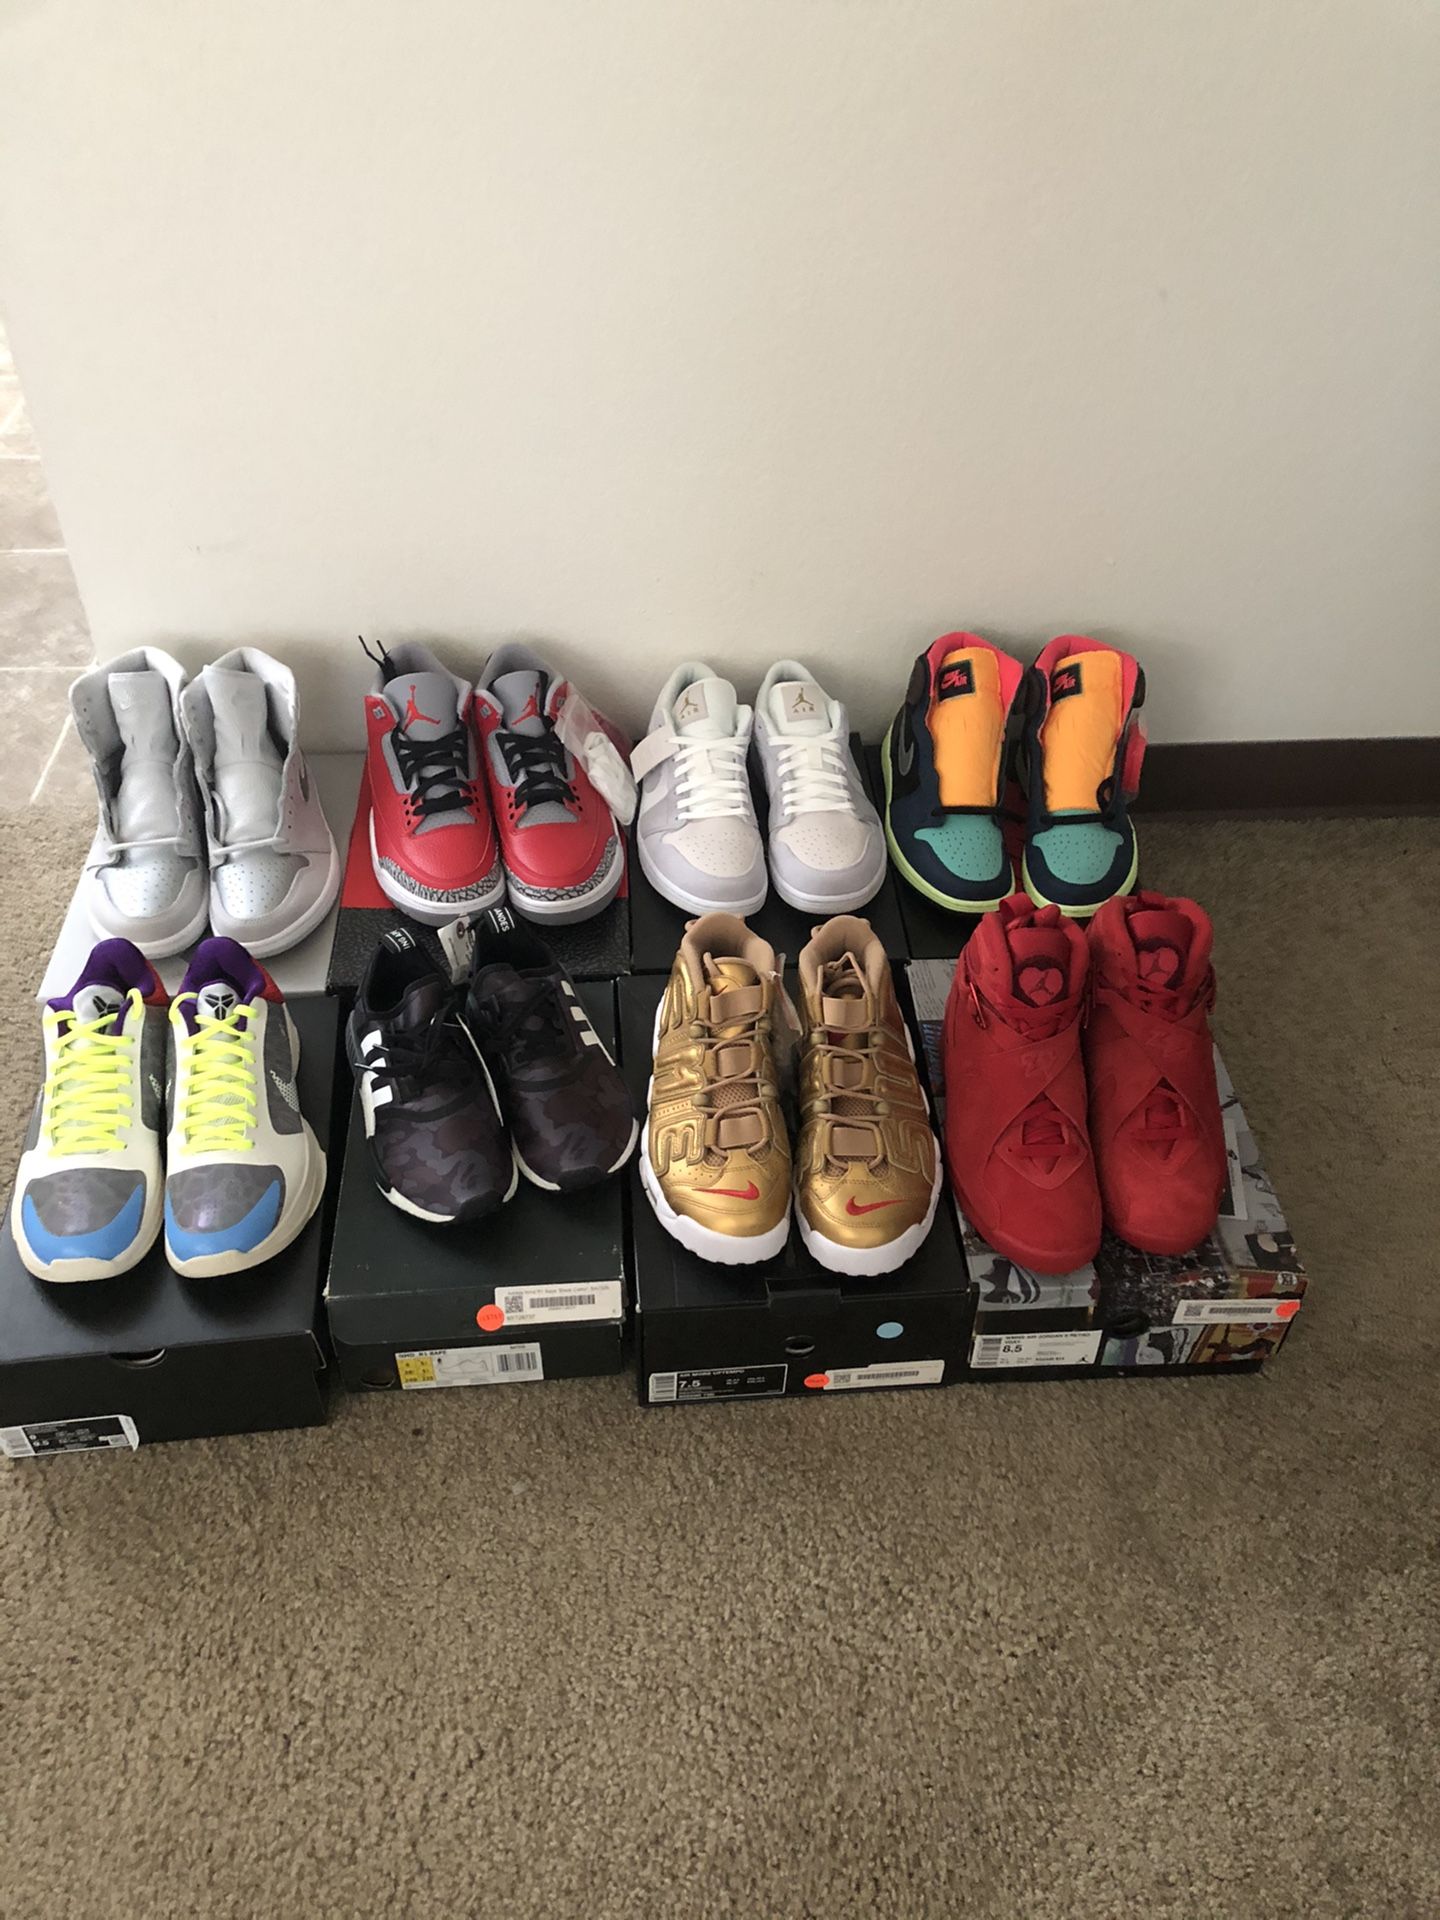 Jordan’s Kobe’s adidas Nike for sale